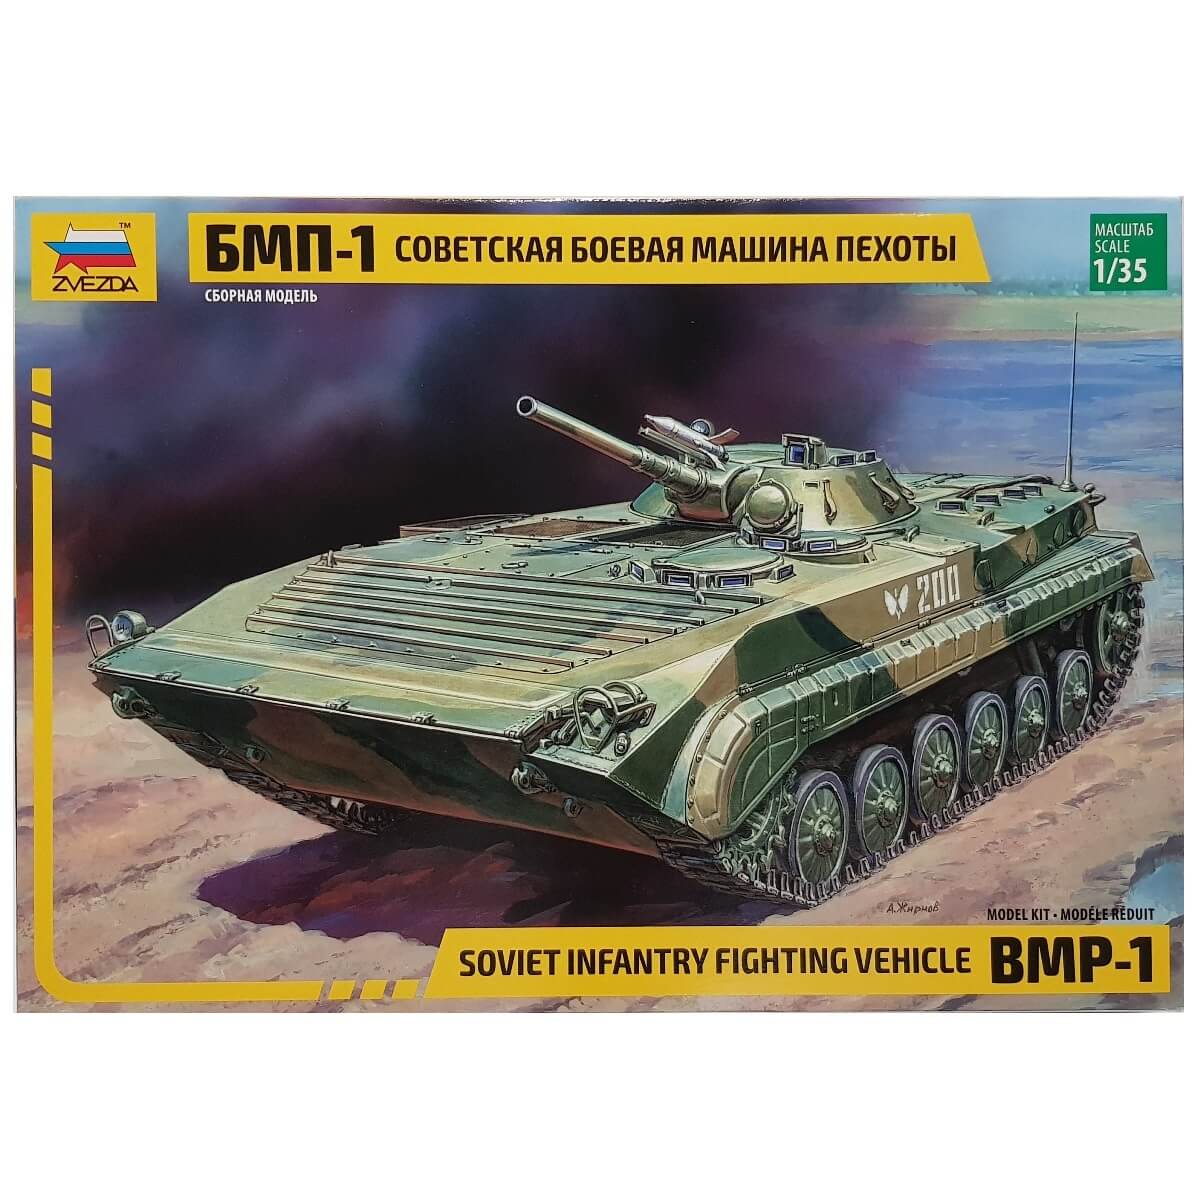 1:35 BMP-1 Soviet Infantry Fighting Vehicle - ZVEZDA